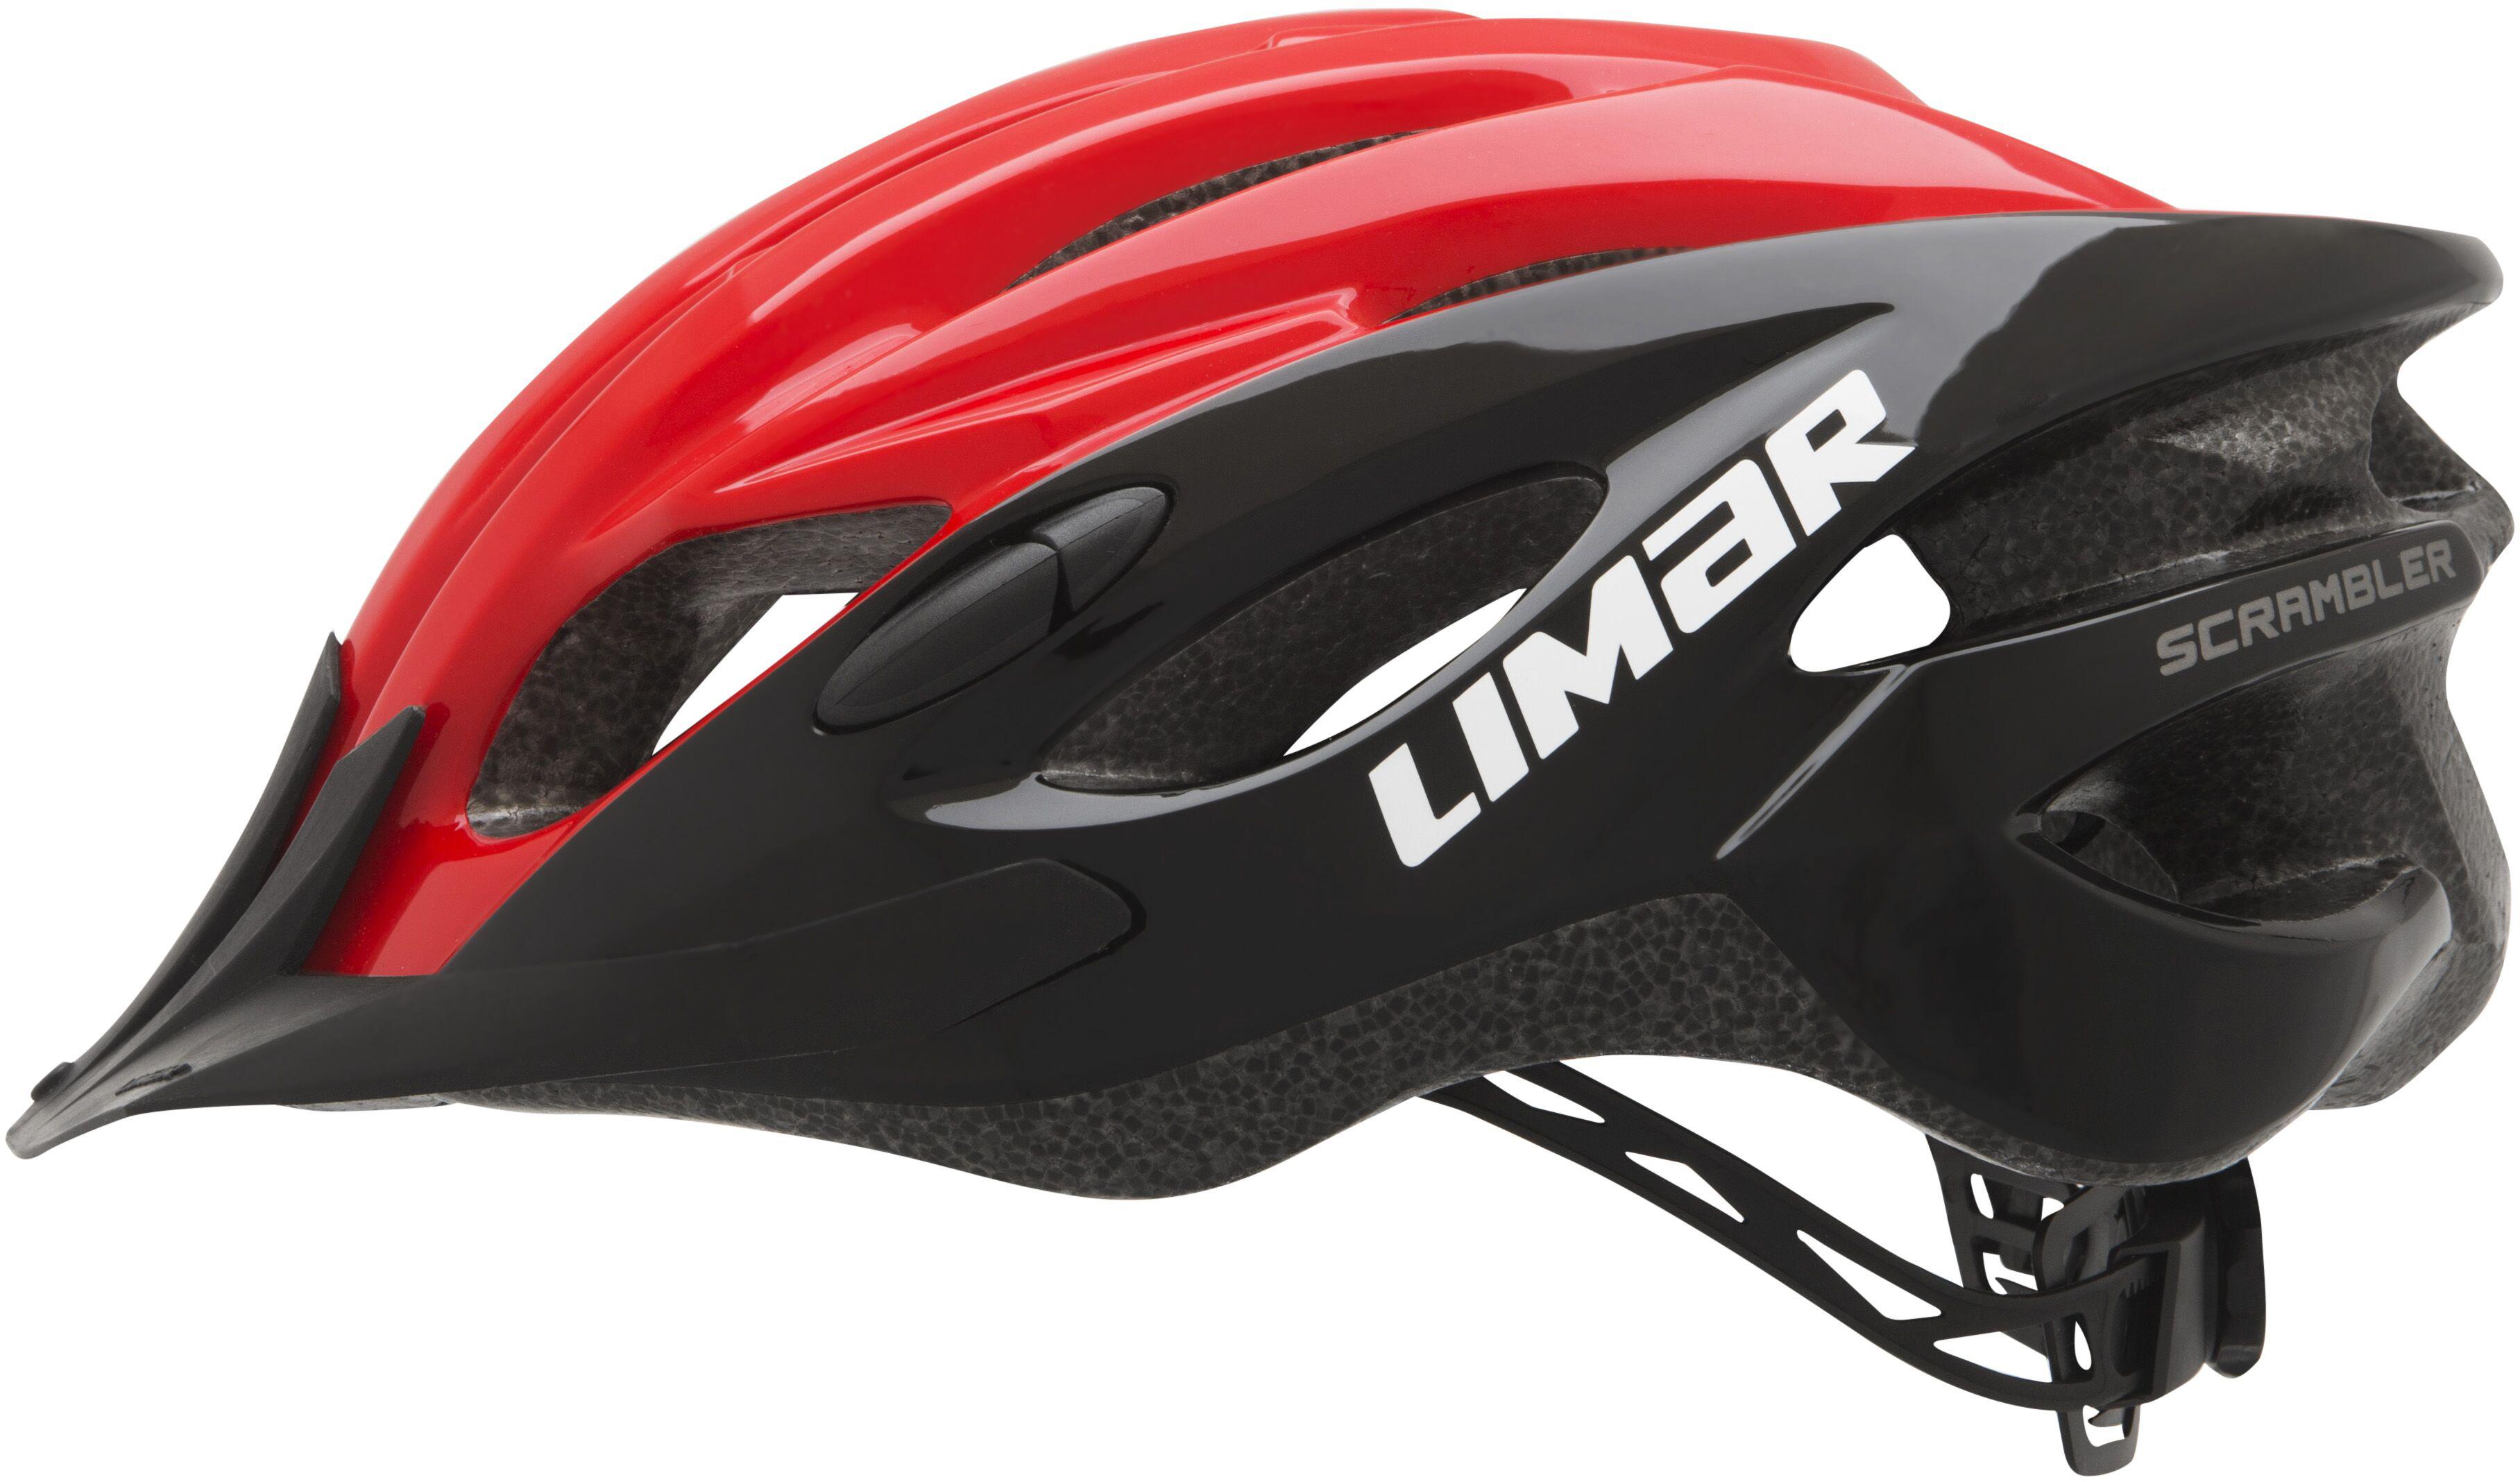 Limar Scrambler Helmet - Red/Black - M